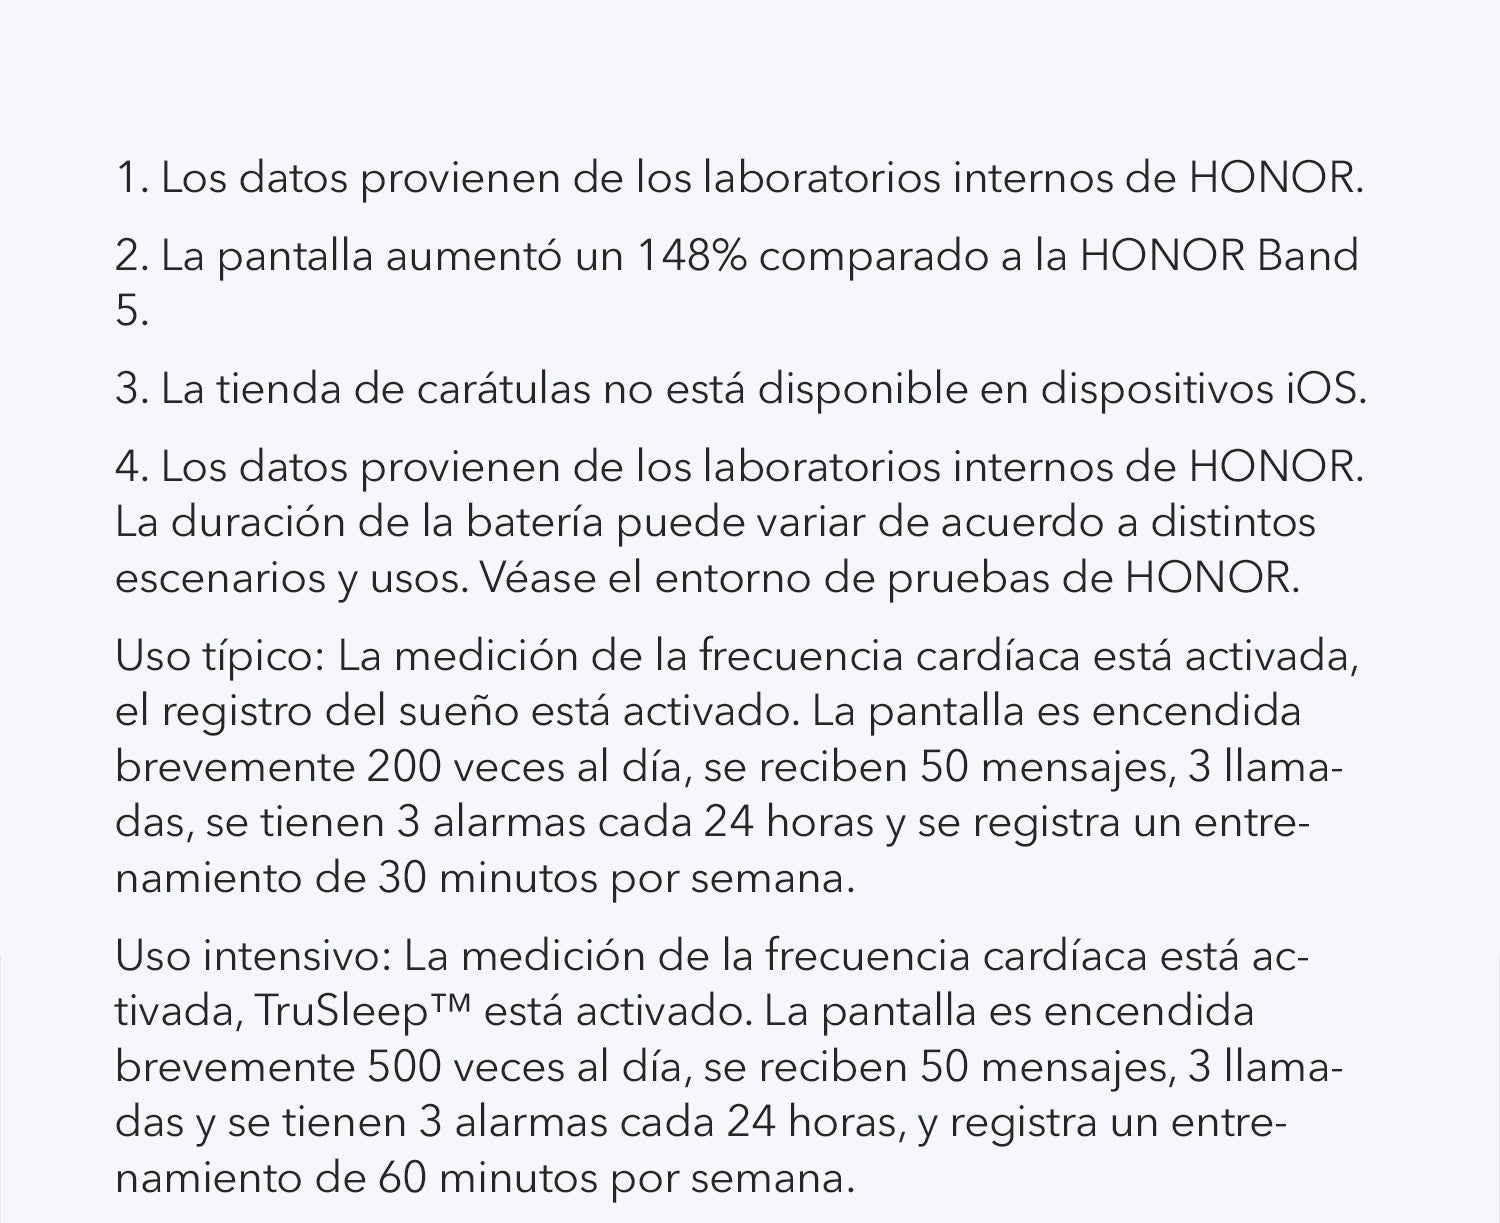 HONOR Band 6